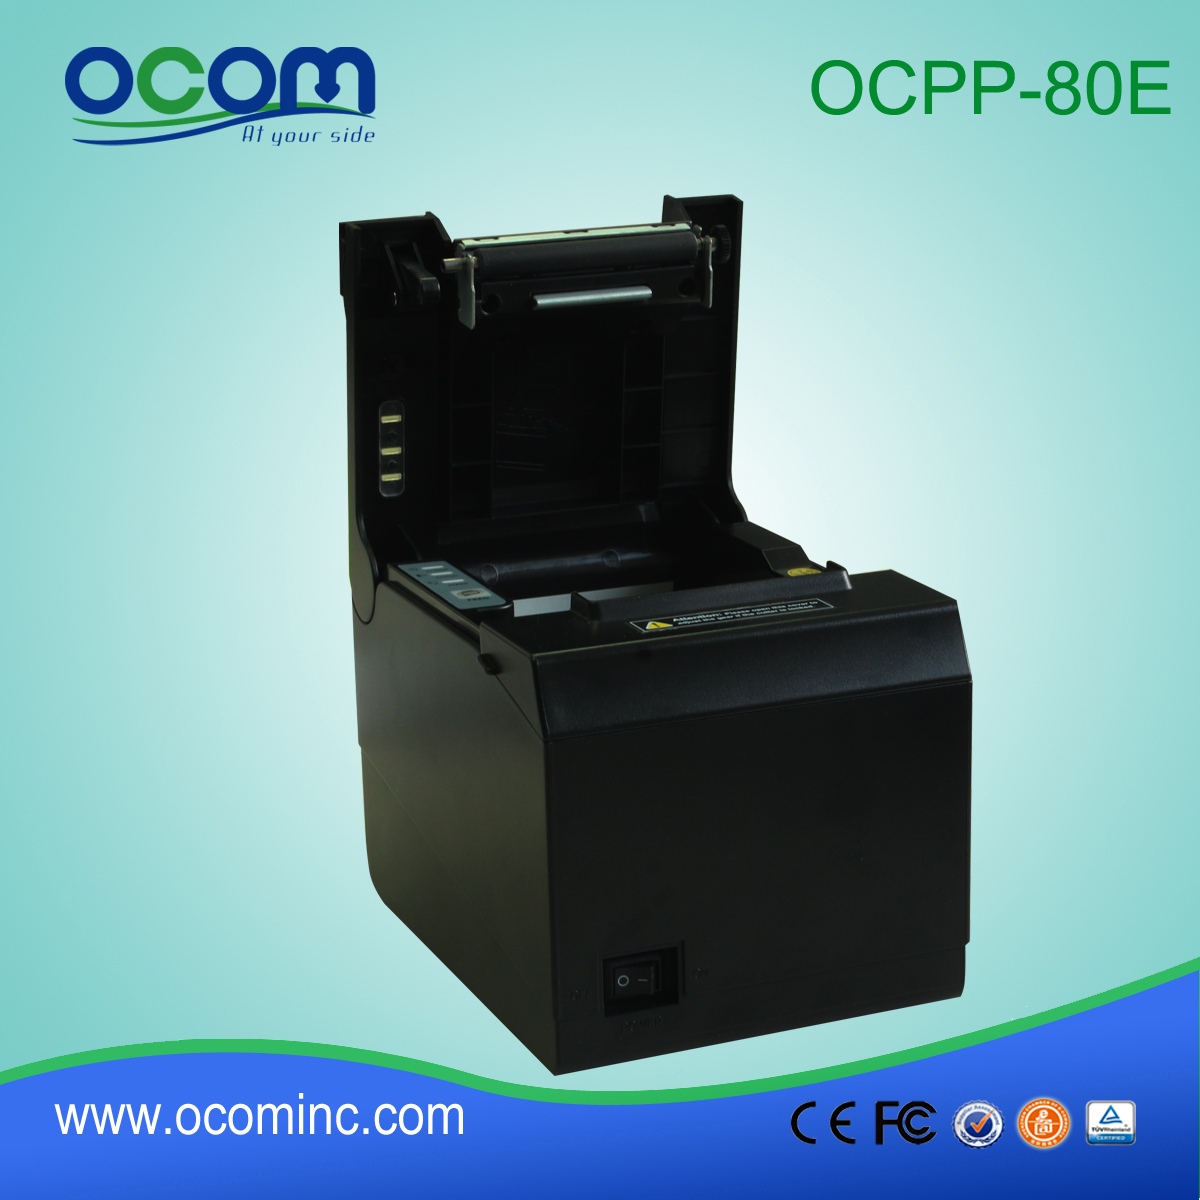 OCPP-80E 80mm pos réception imprimante support thermique mural